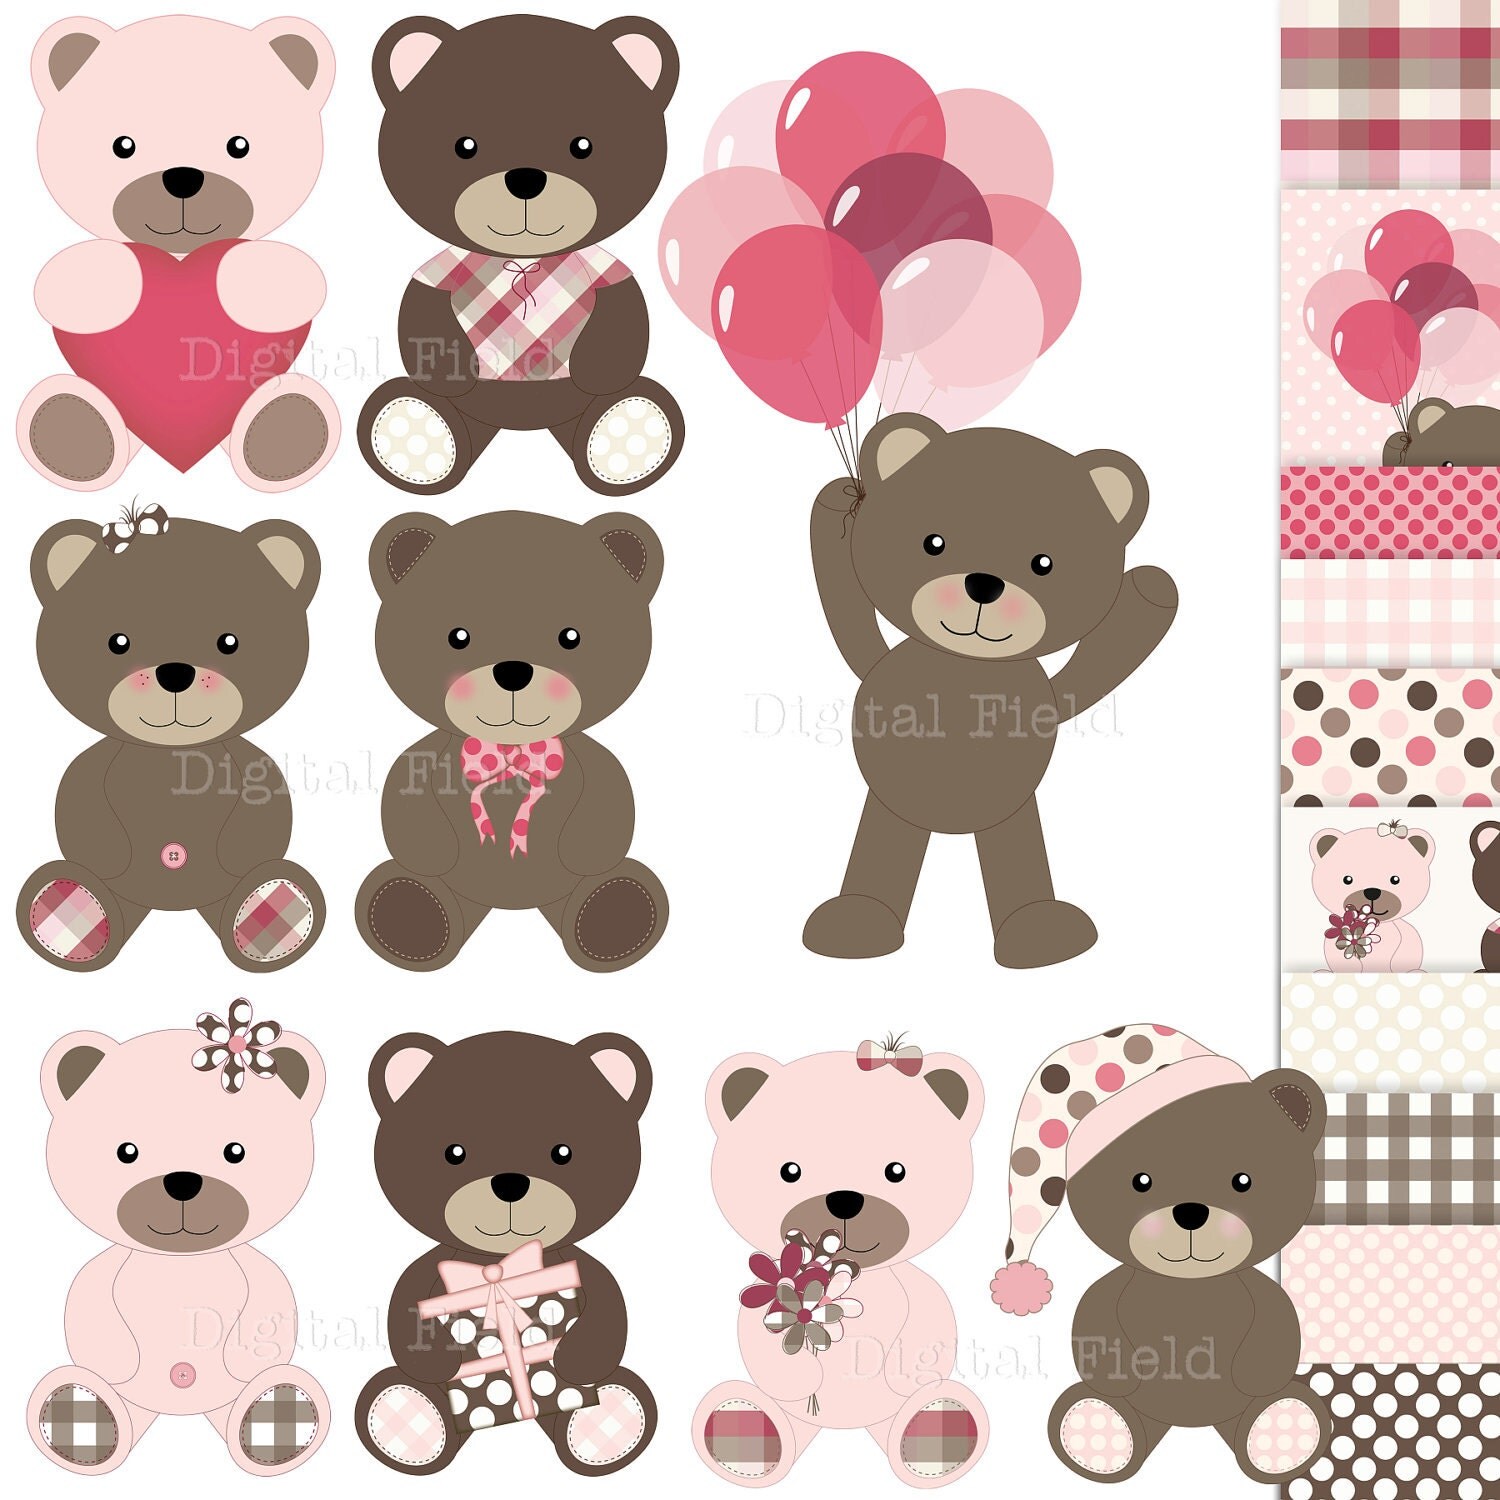 clip art pink teddy bear - photo #19